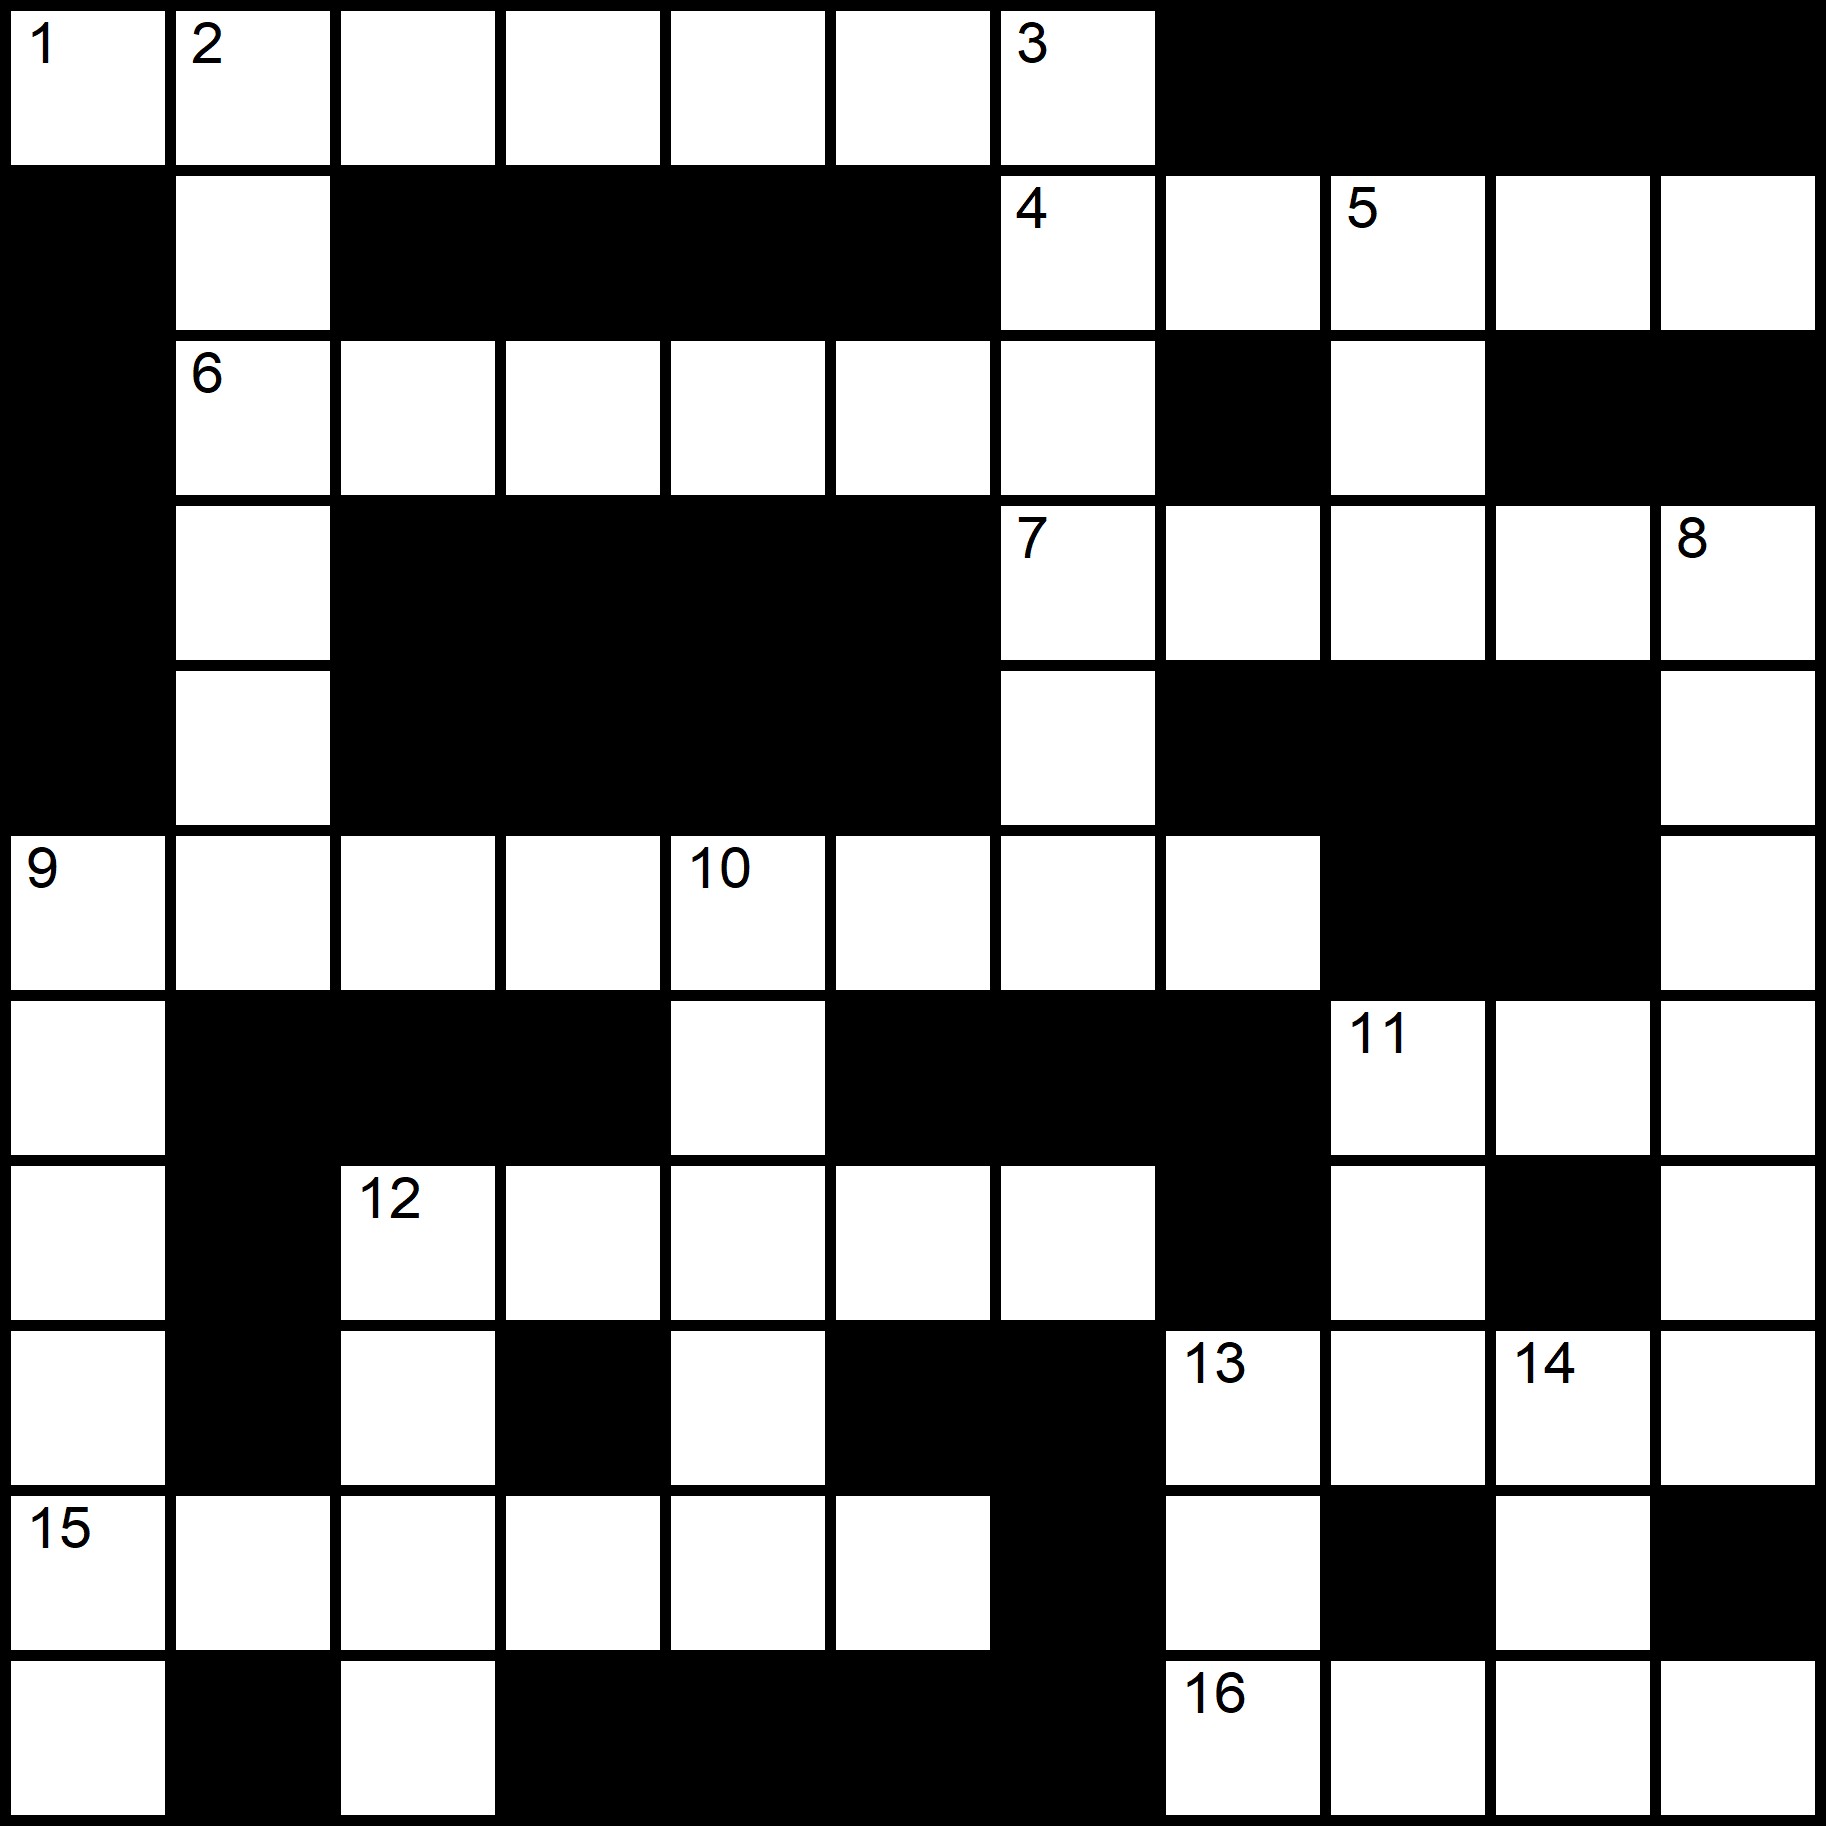 Easy ESL Crosswords Printable Free -
Placidus Flora - Crossword number twenty-four